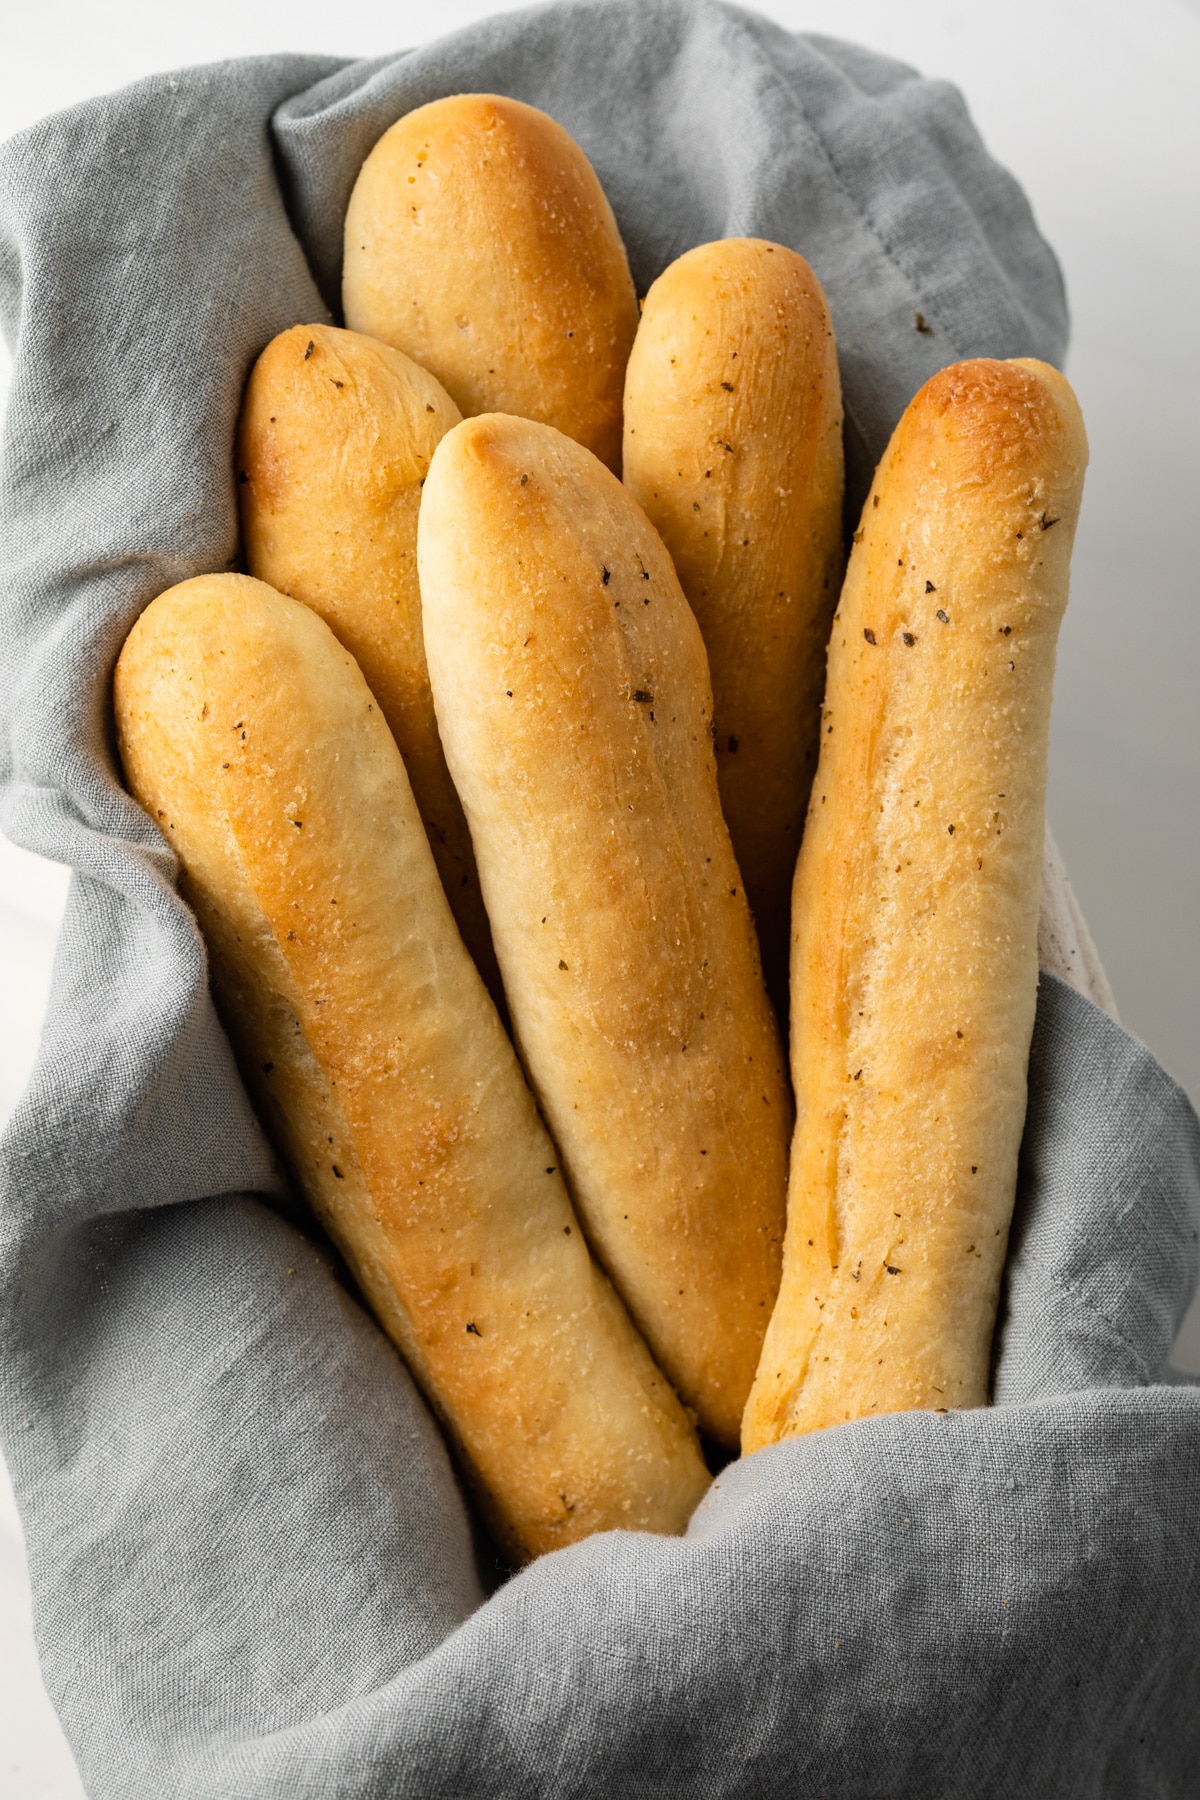 Garlic breadsticks in a bread basket.